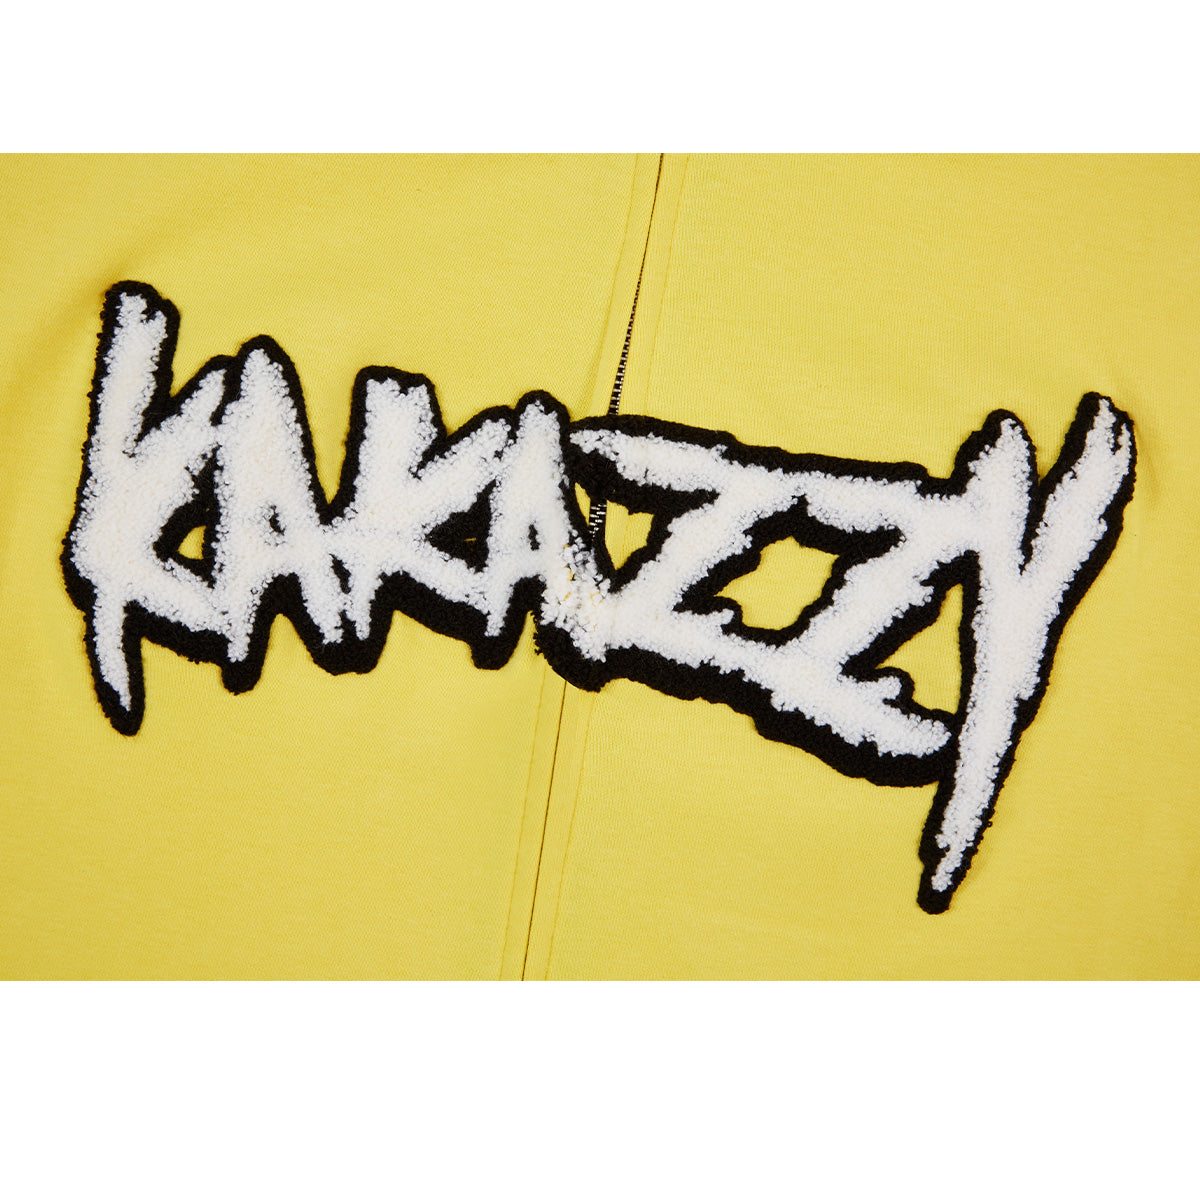 Kakazzy Full Zip Hoodie Yellow（Eyes Can See）